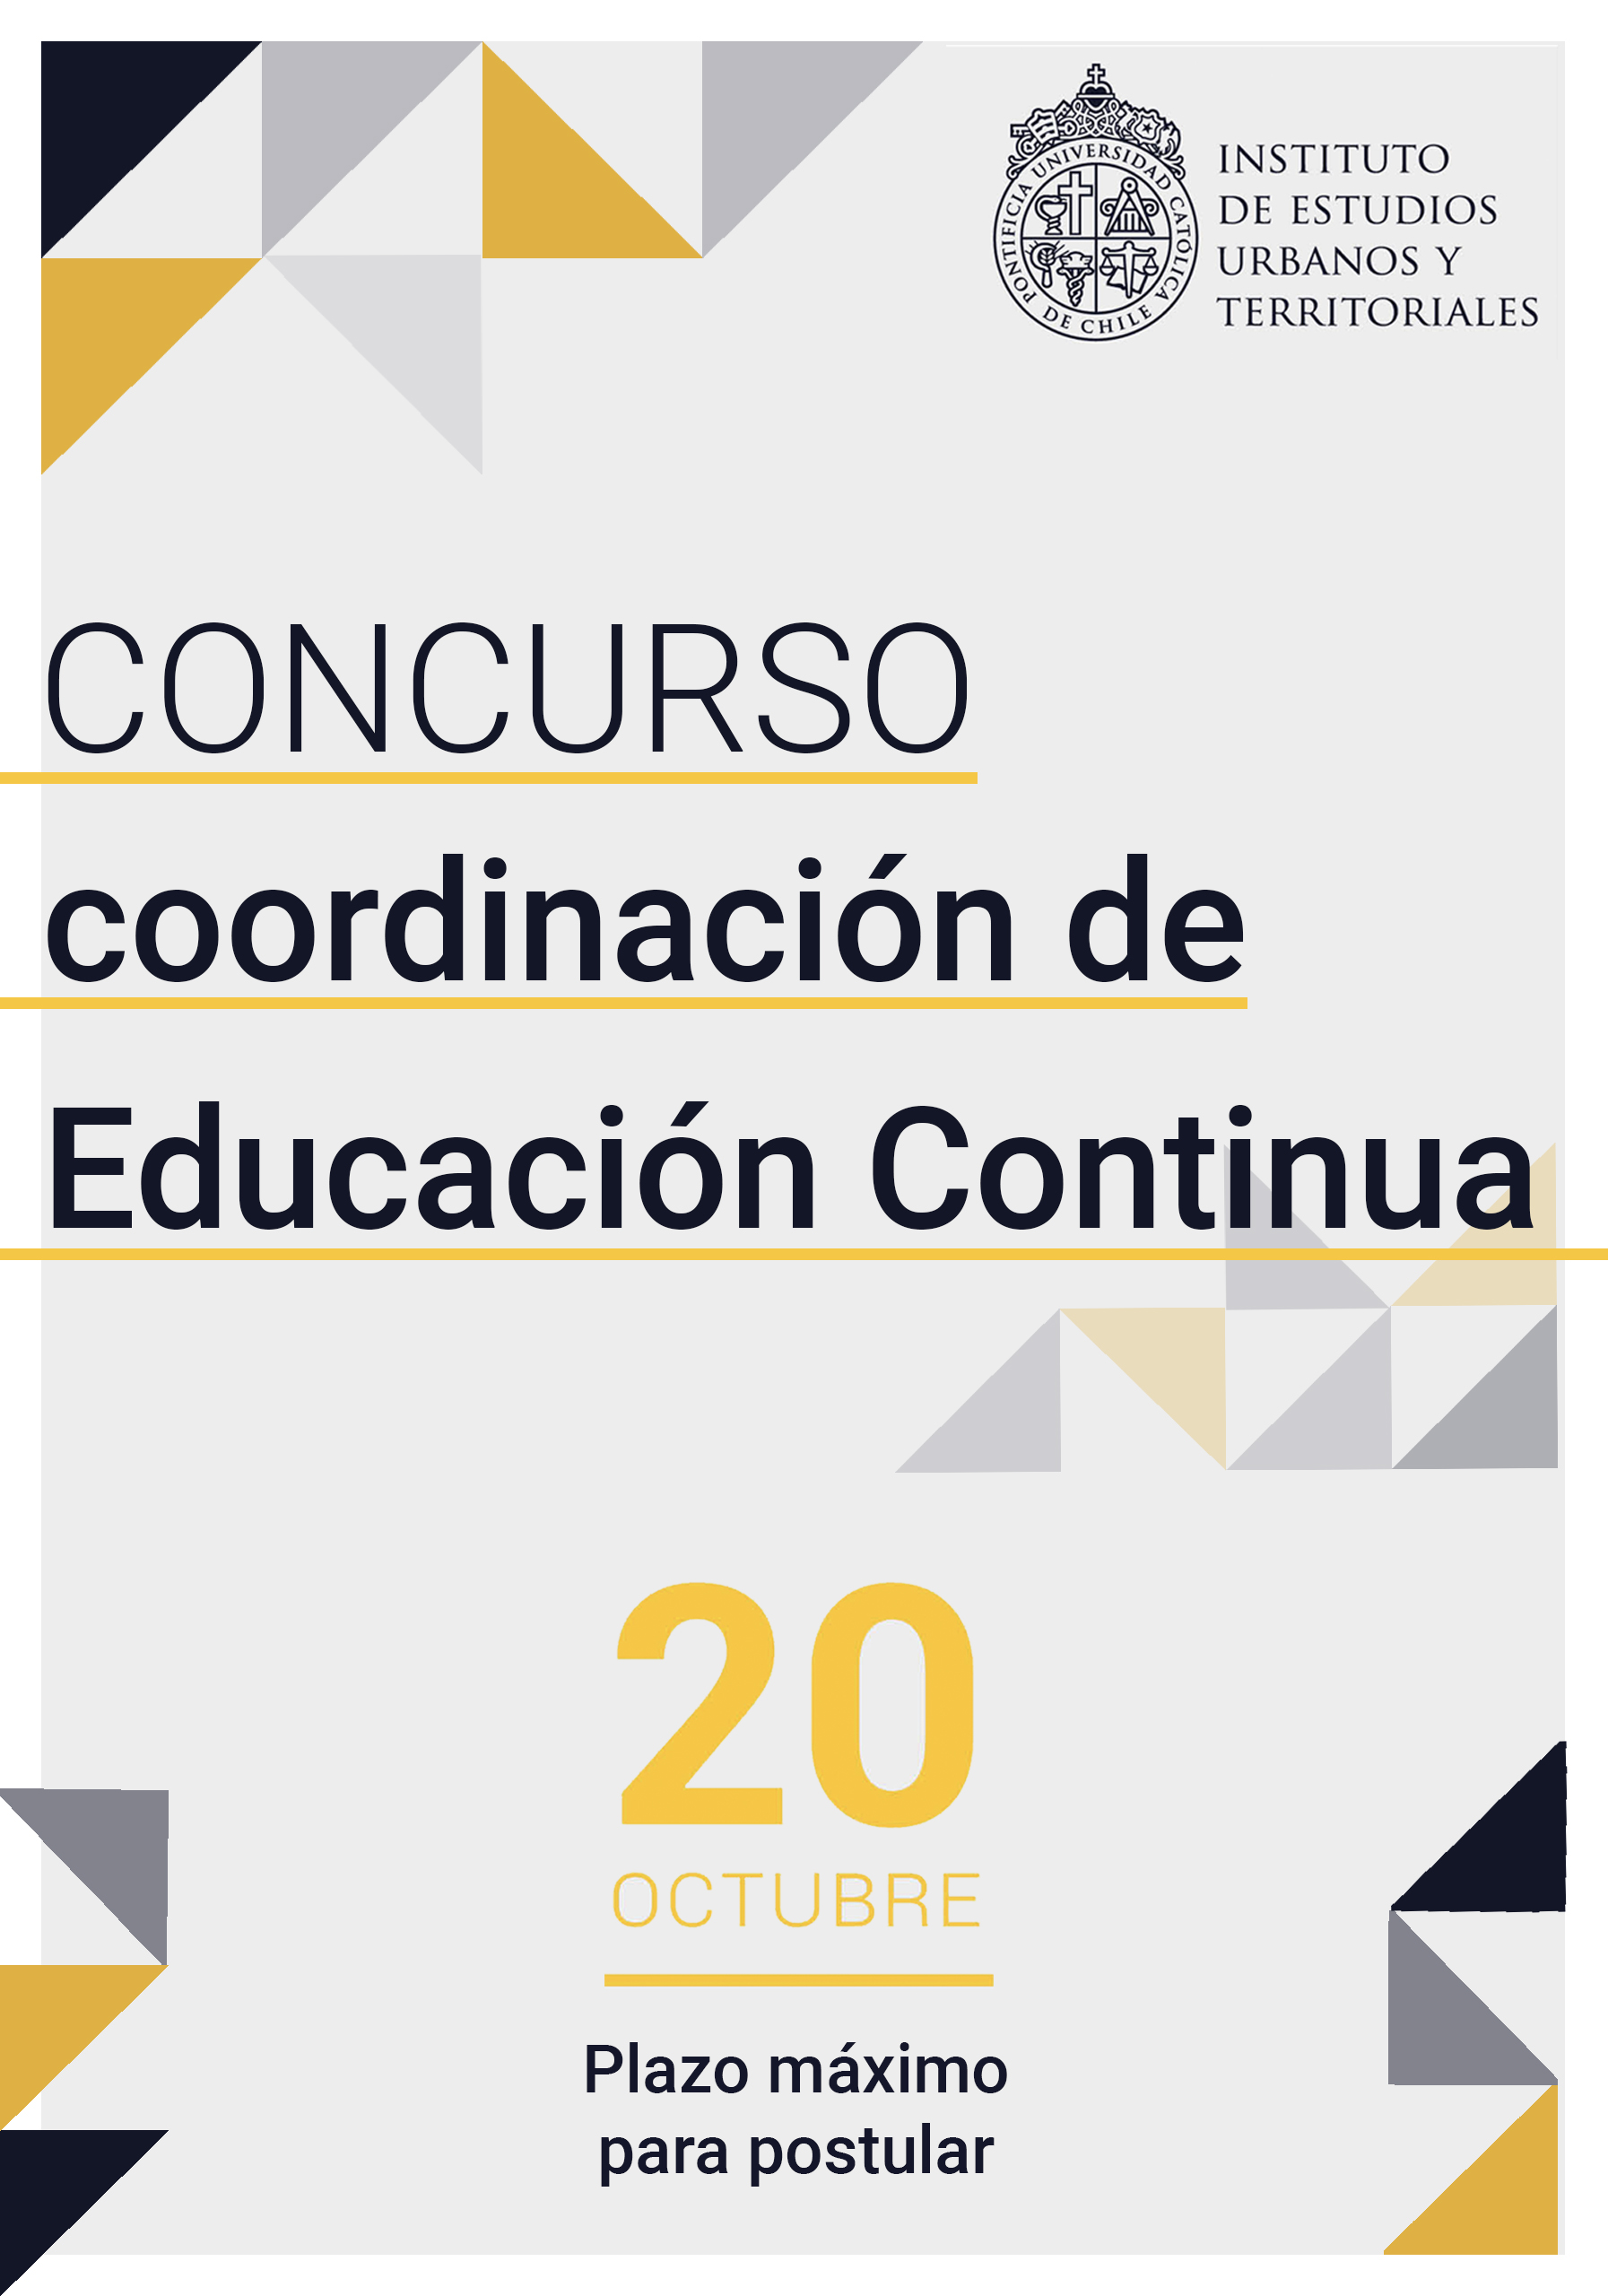 CONVOCATORIA | Concurso Coordinación Educación Continua IEUT